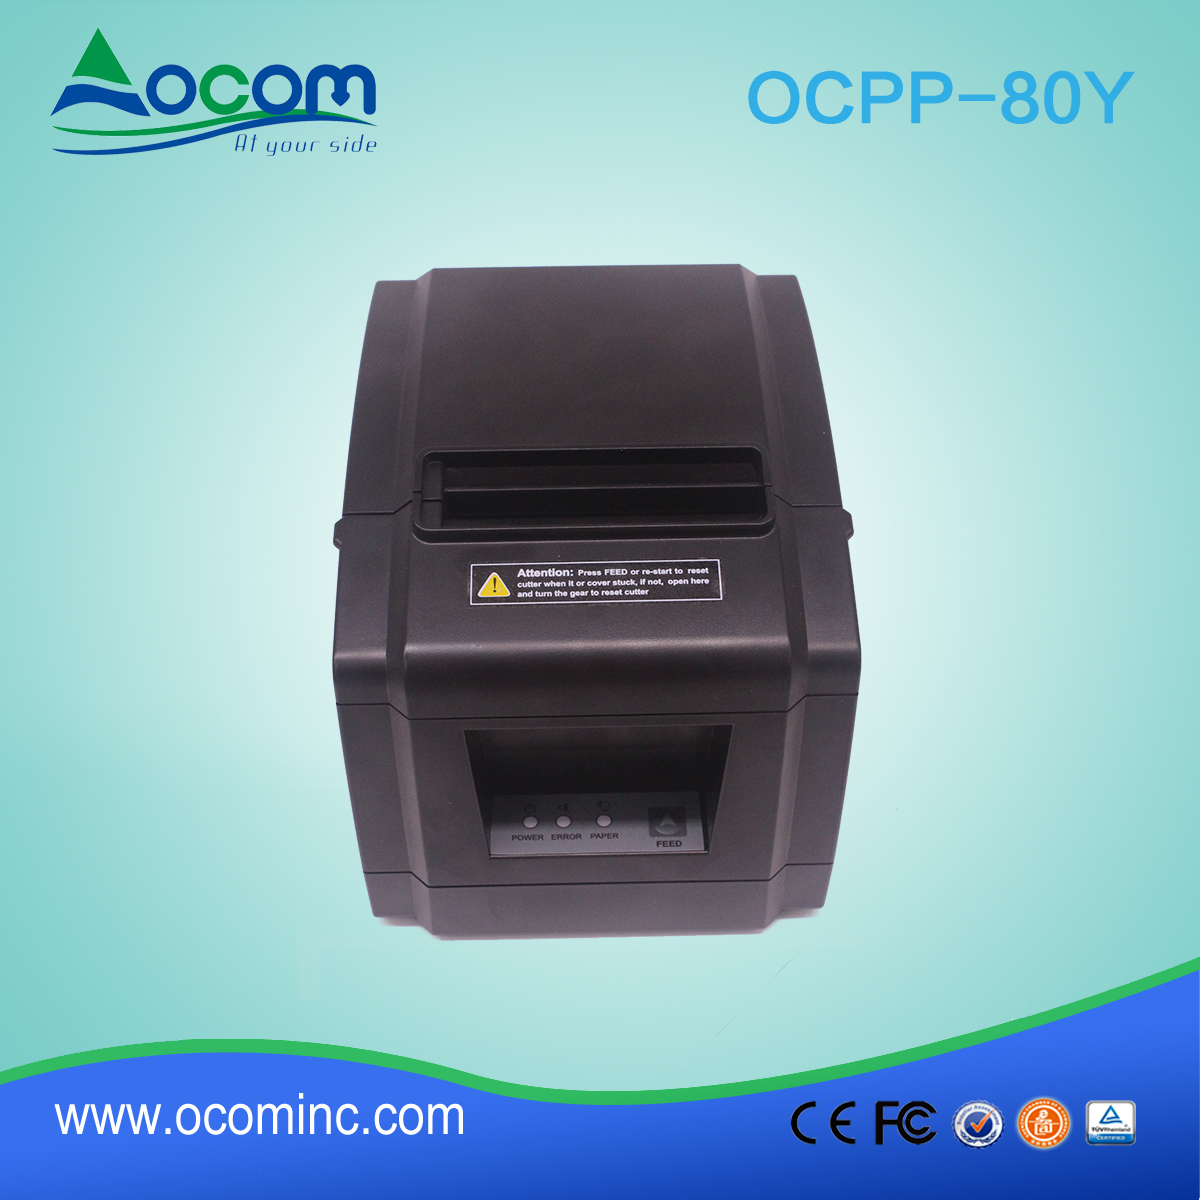 OCPP-80Y-Impressora térmica térmica de recebimento de 80 mm com cortador automático